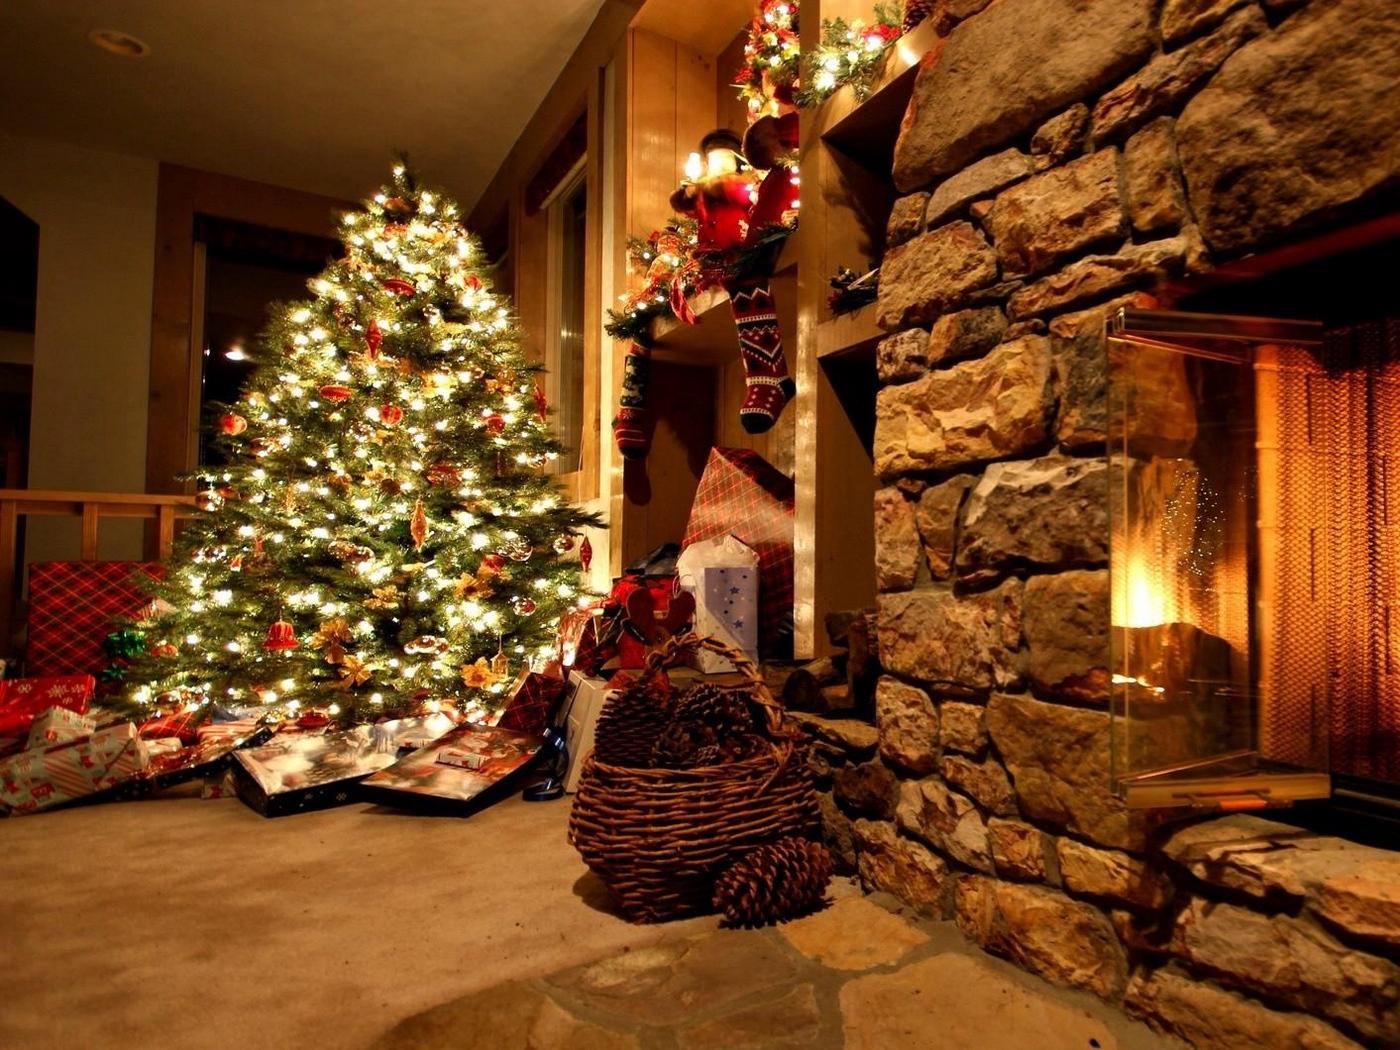 Download wallpaper 1400x1050 christmas tree, ornaments